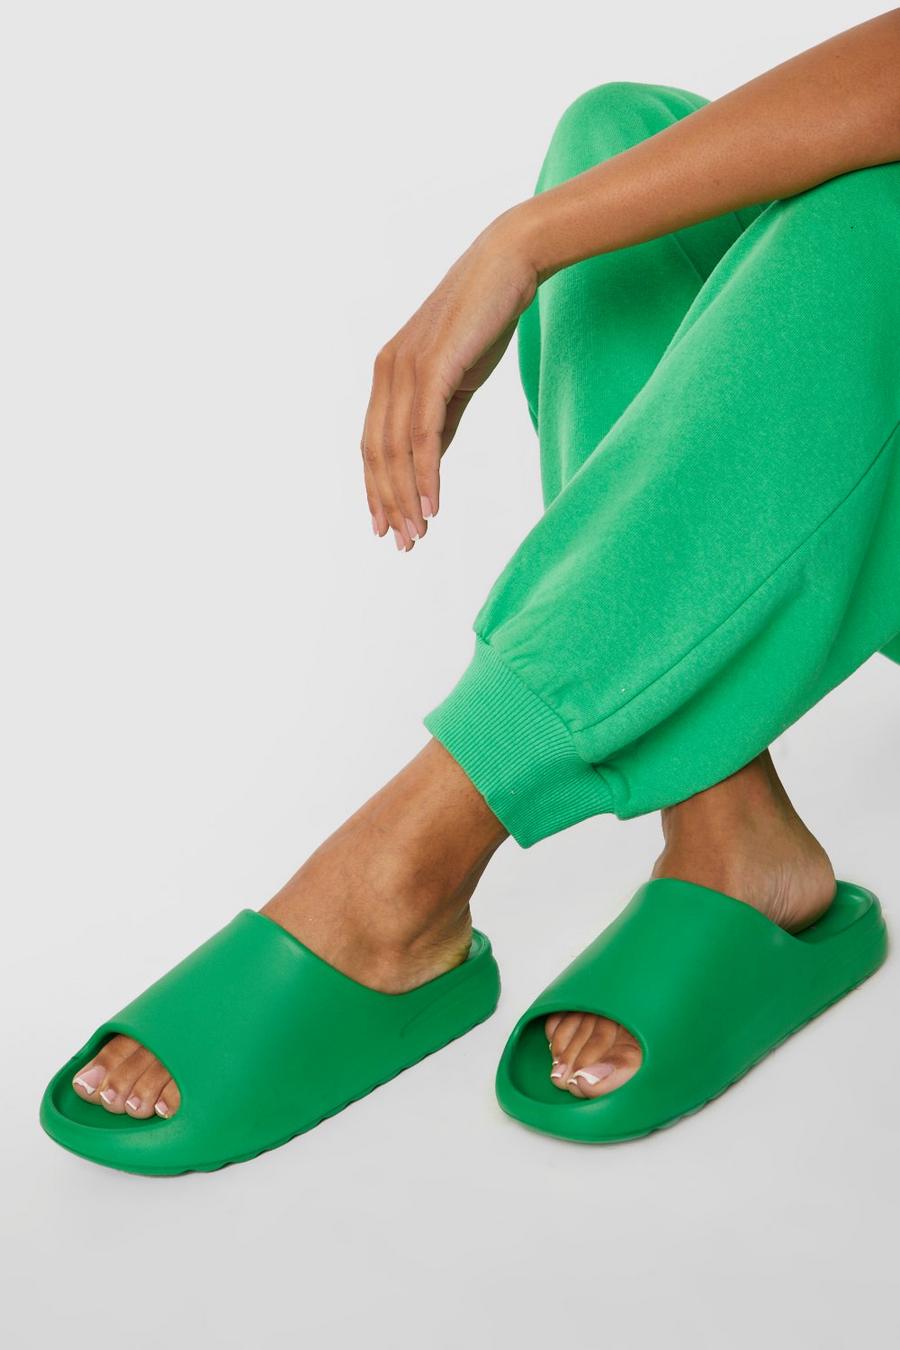 Sandalias gruesas, Green verde